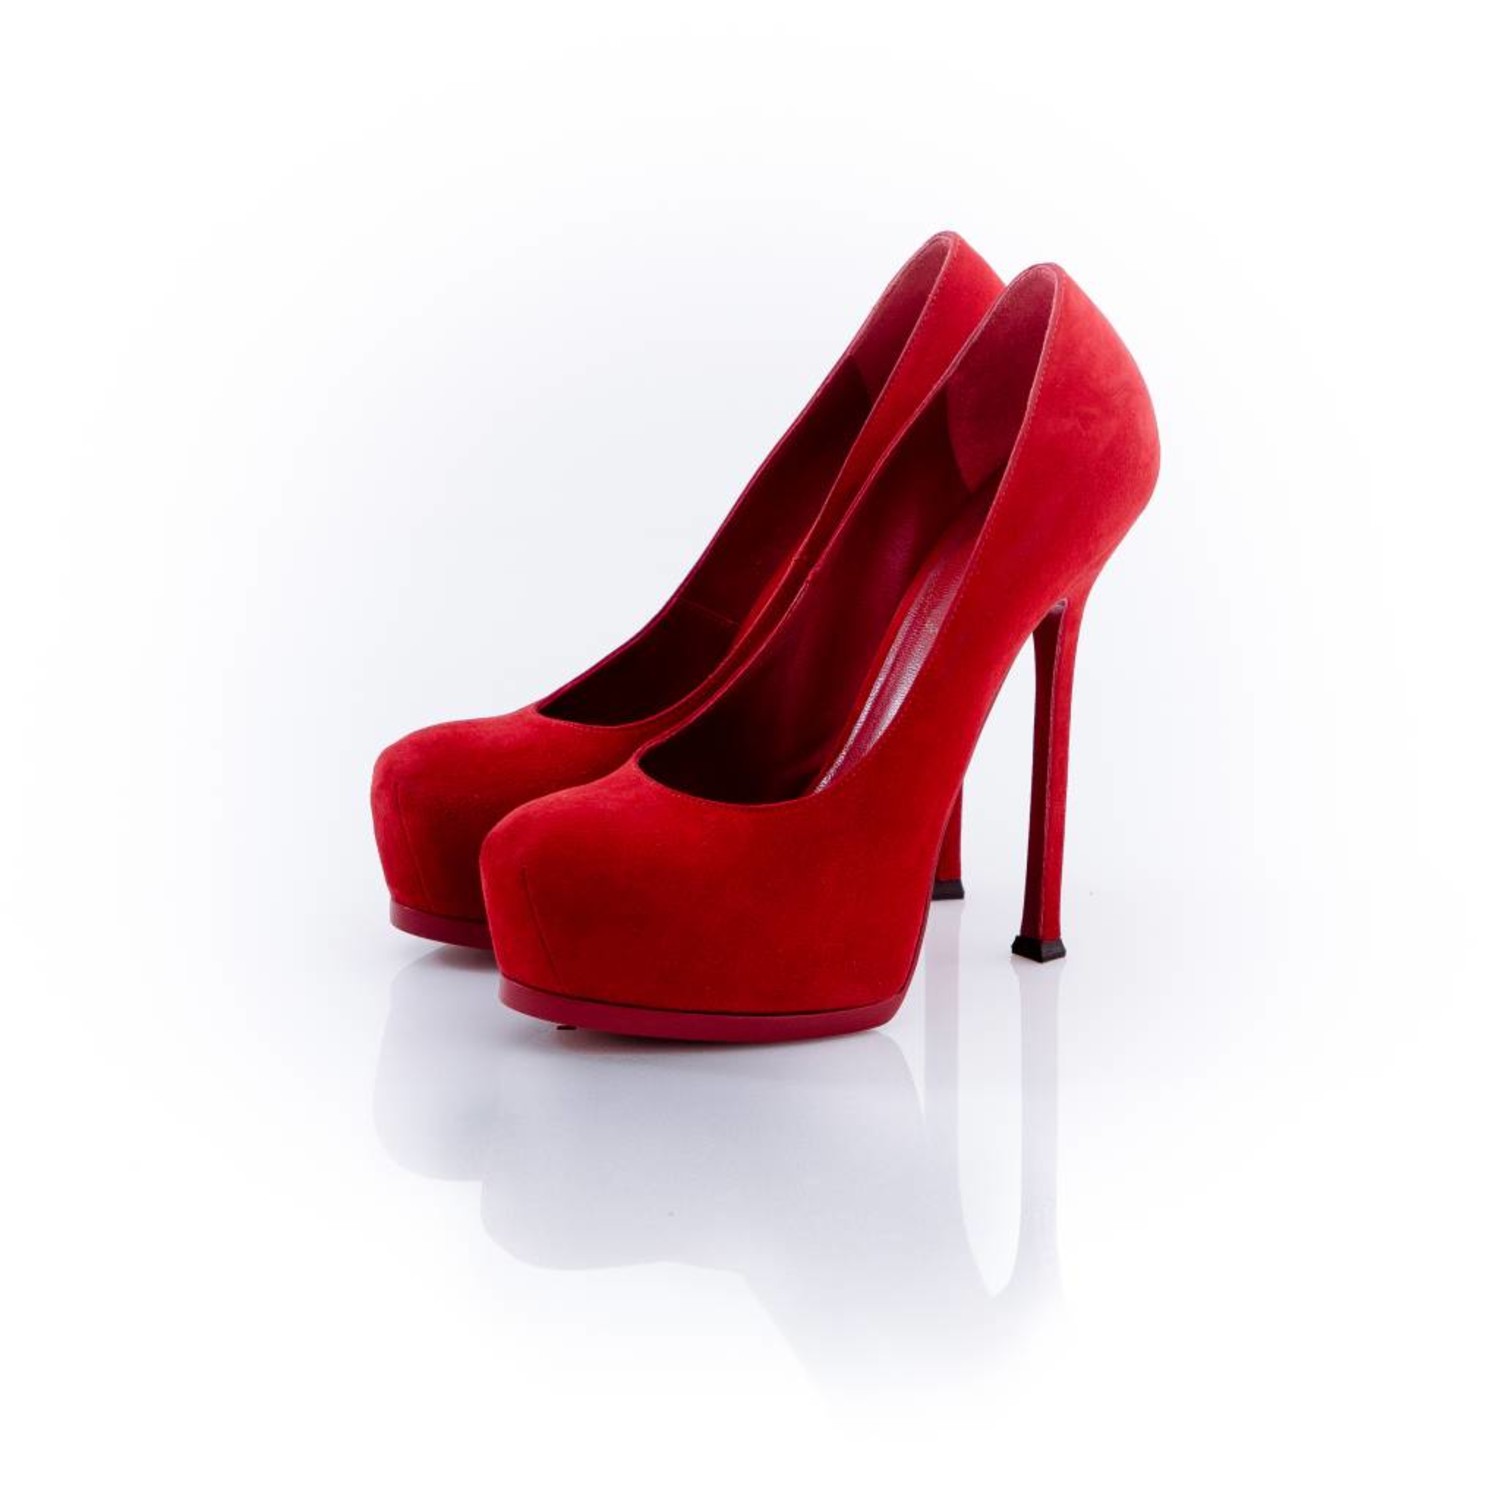 Yves Saint Laurent, red Tribtoo platform pumps. - Pieces